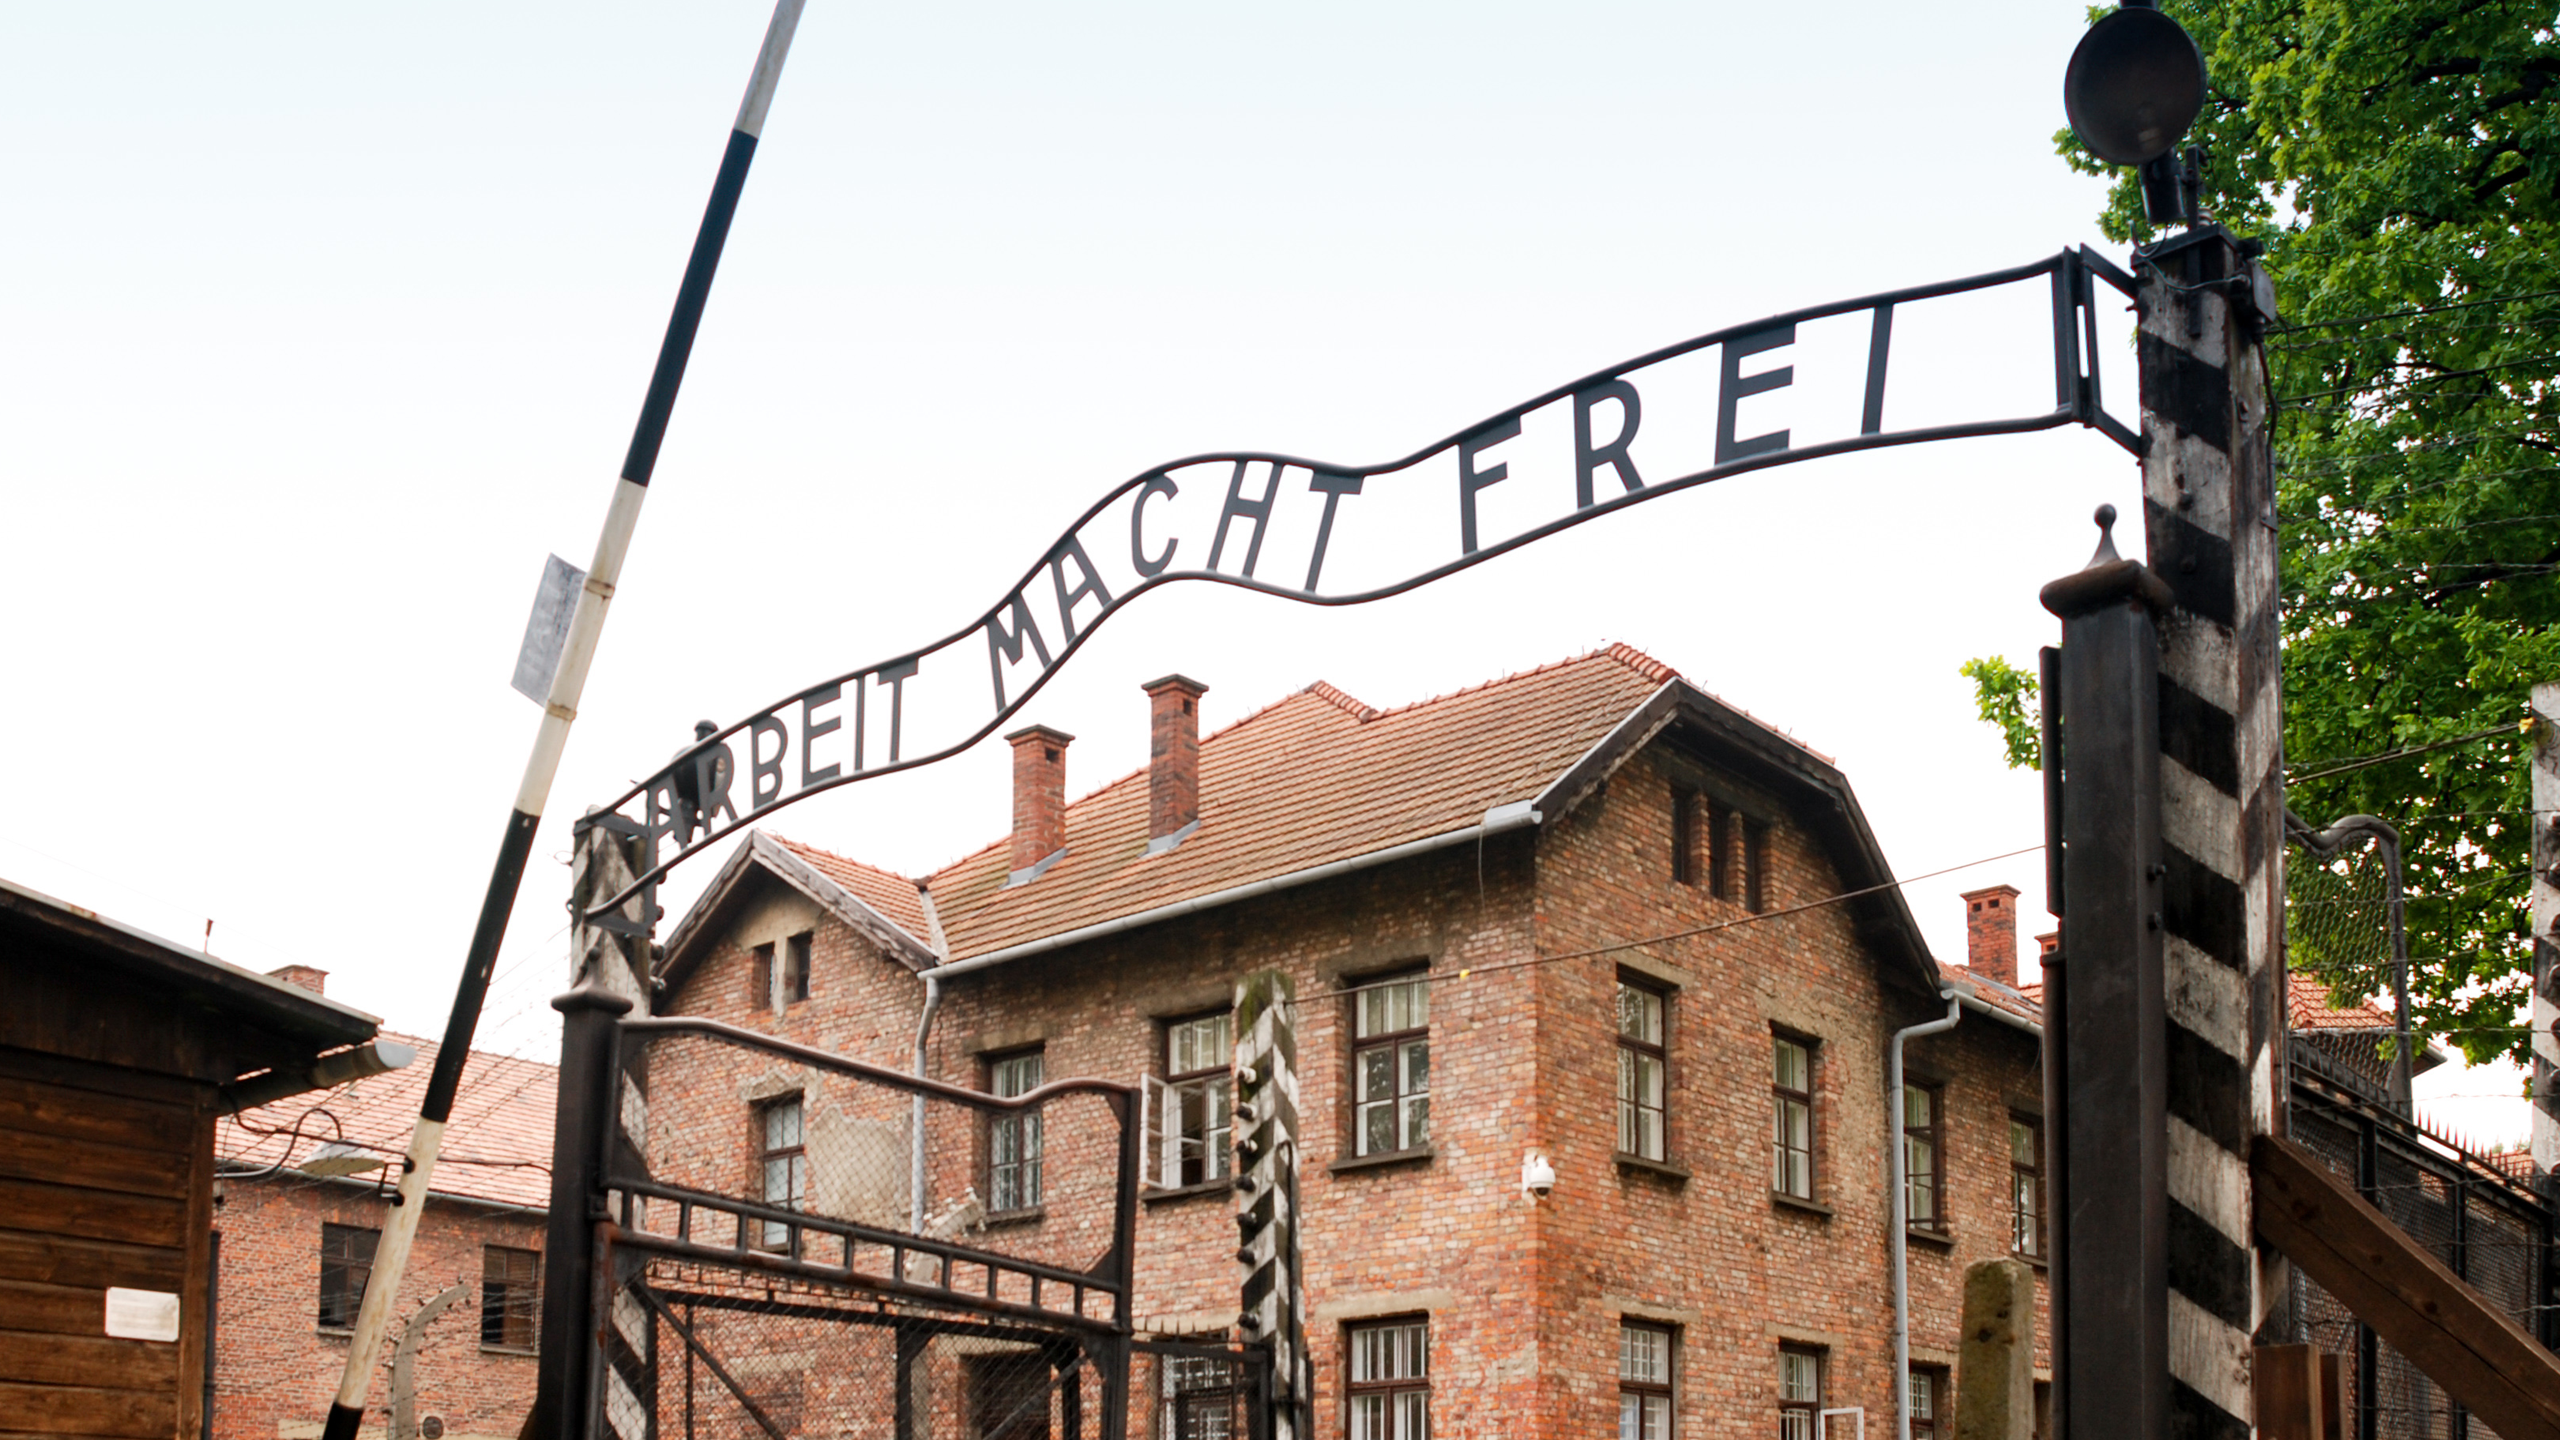 Auschwitz I Concentration Camp